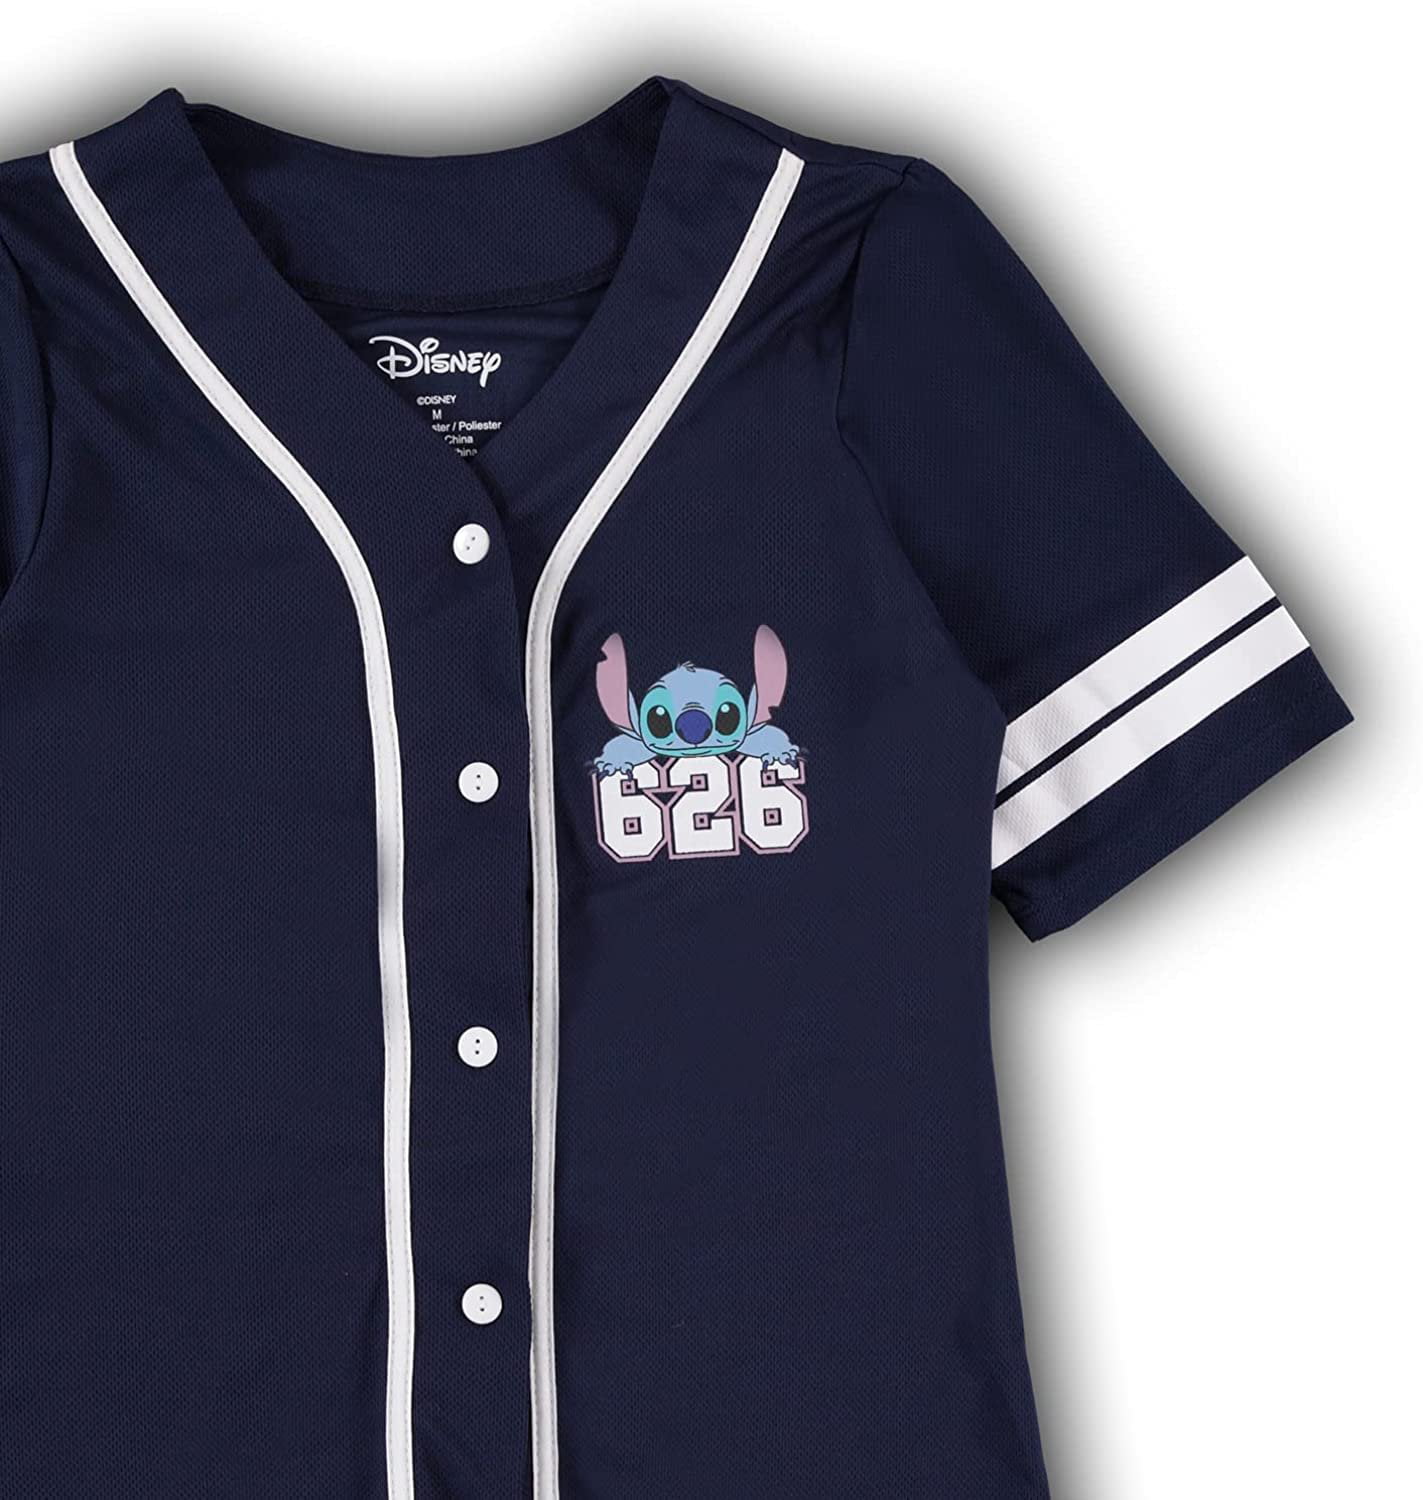 Texas Rangers Lilo & Stitch Baseball Jersey - White - Scesy